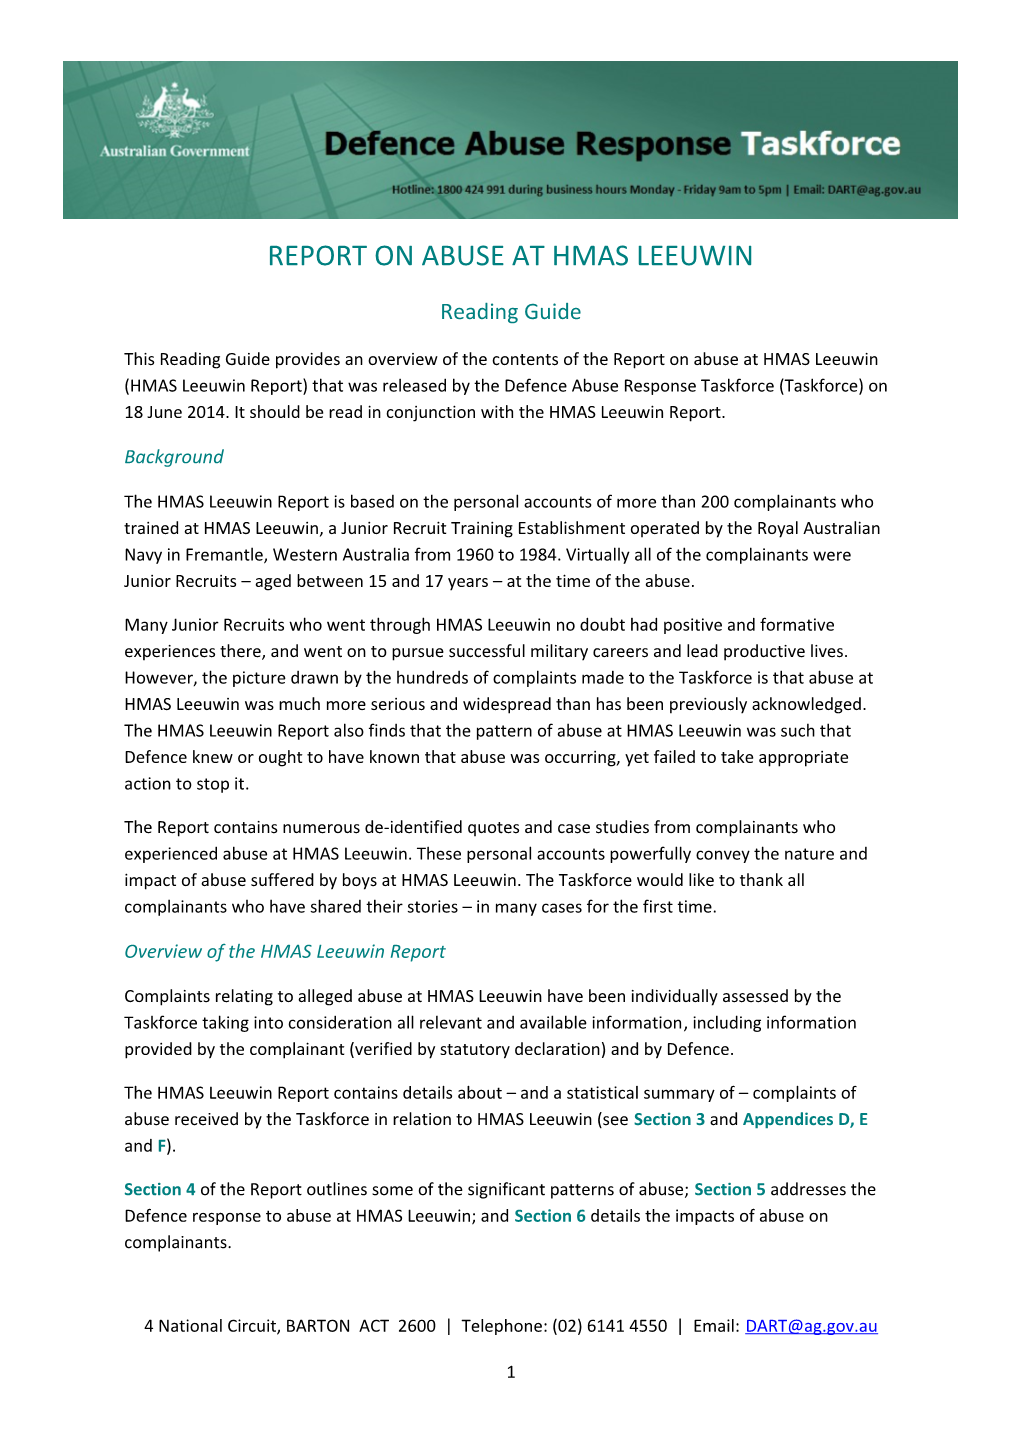 HMAS Leeuwin Report Reading Guide